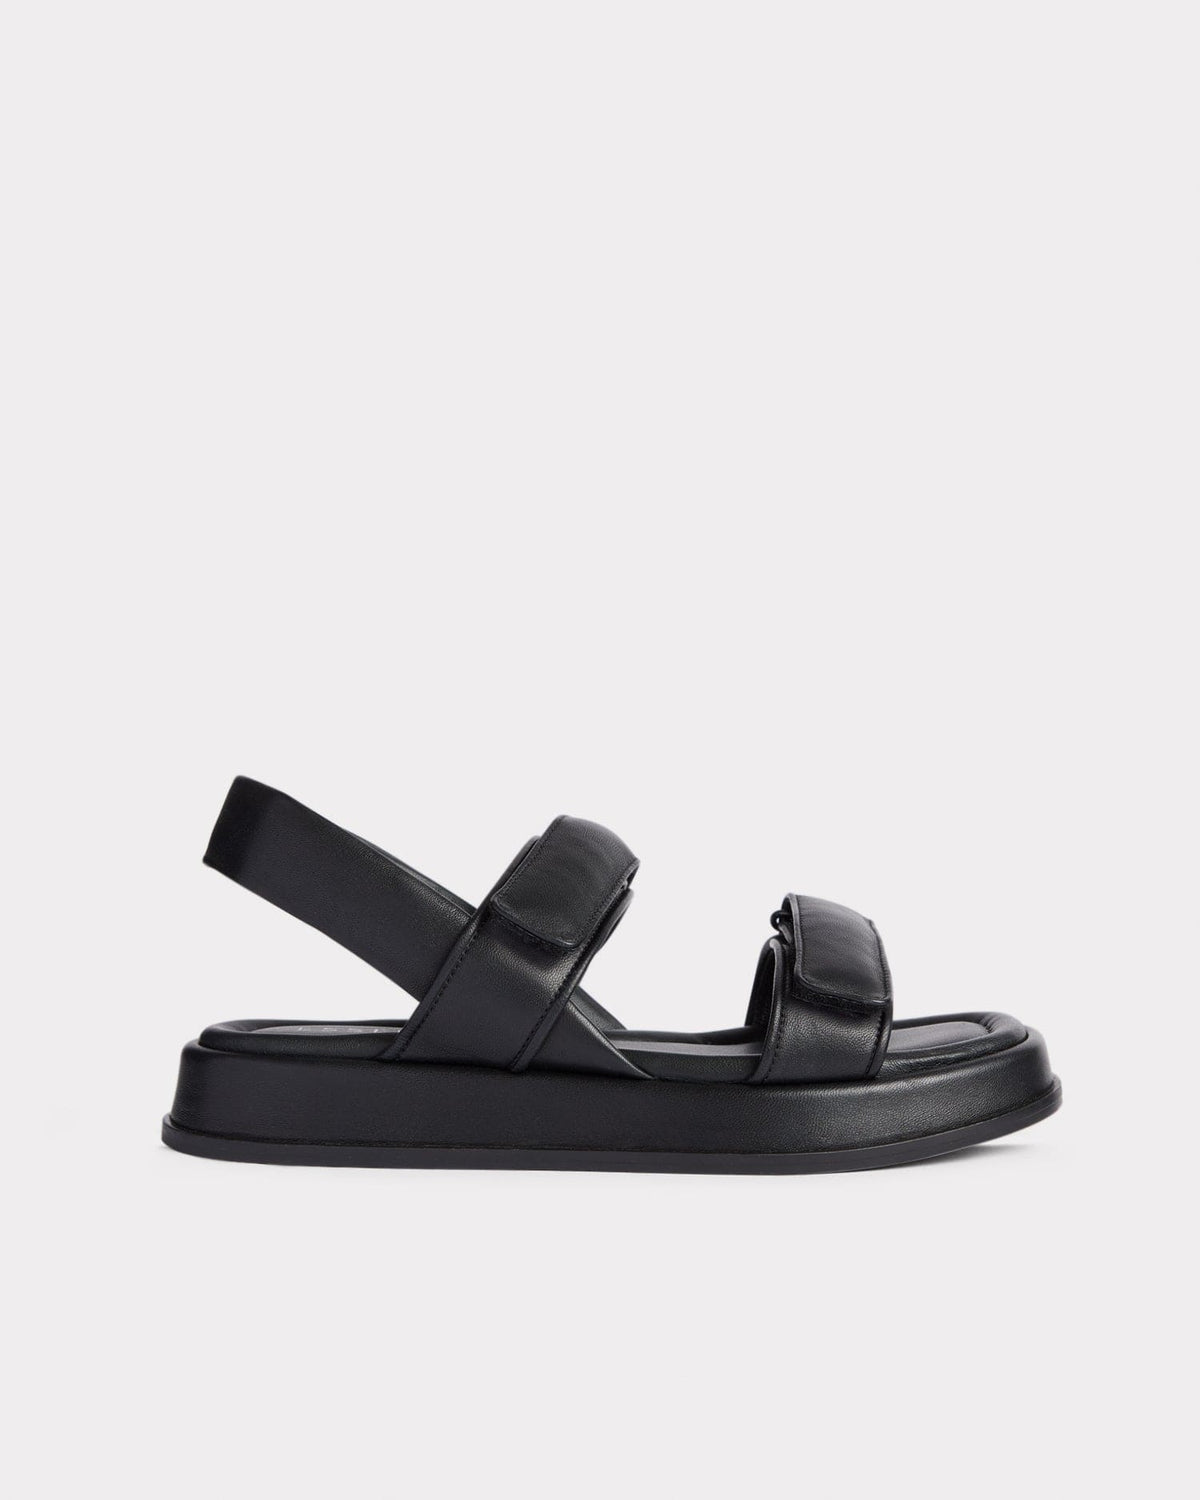 The Sporty Sandal - Black Sandals ESSĒN Black Leather 35